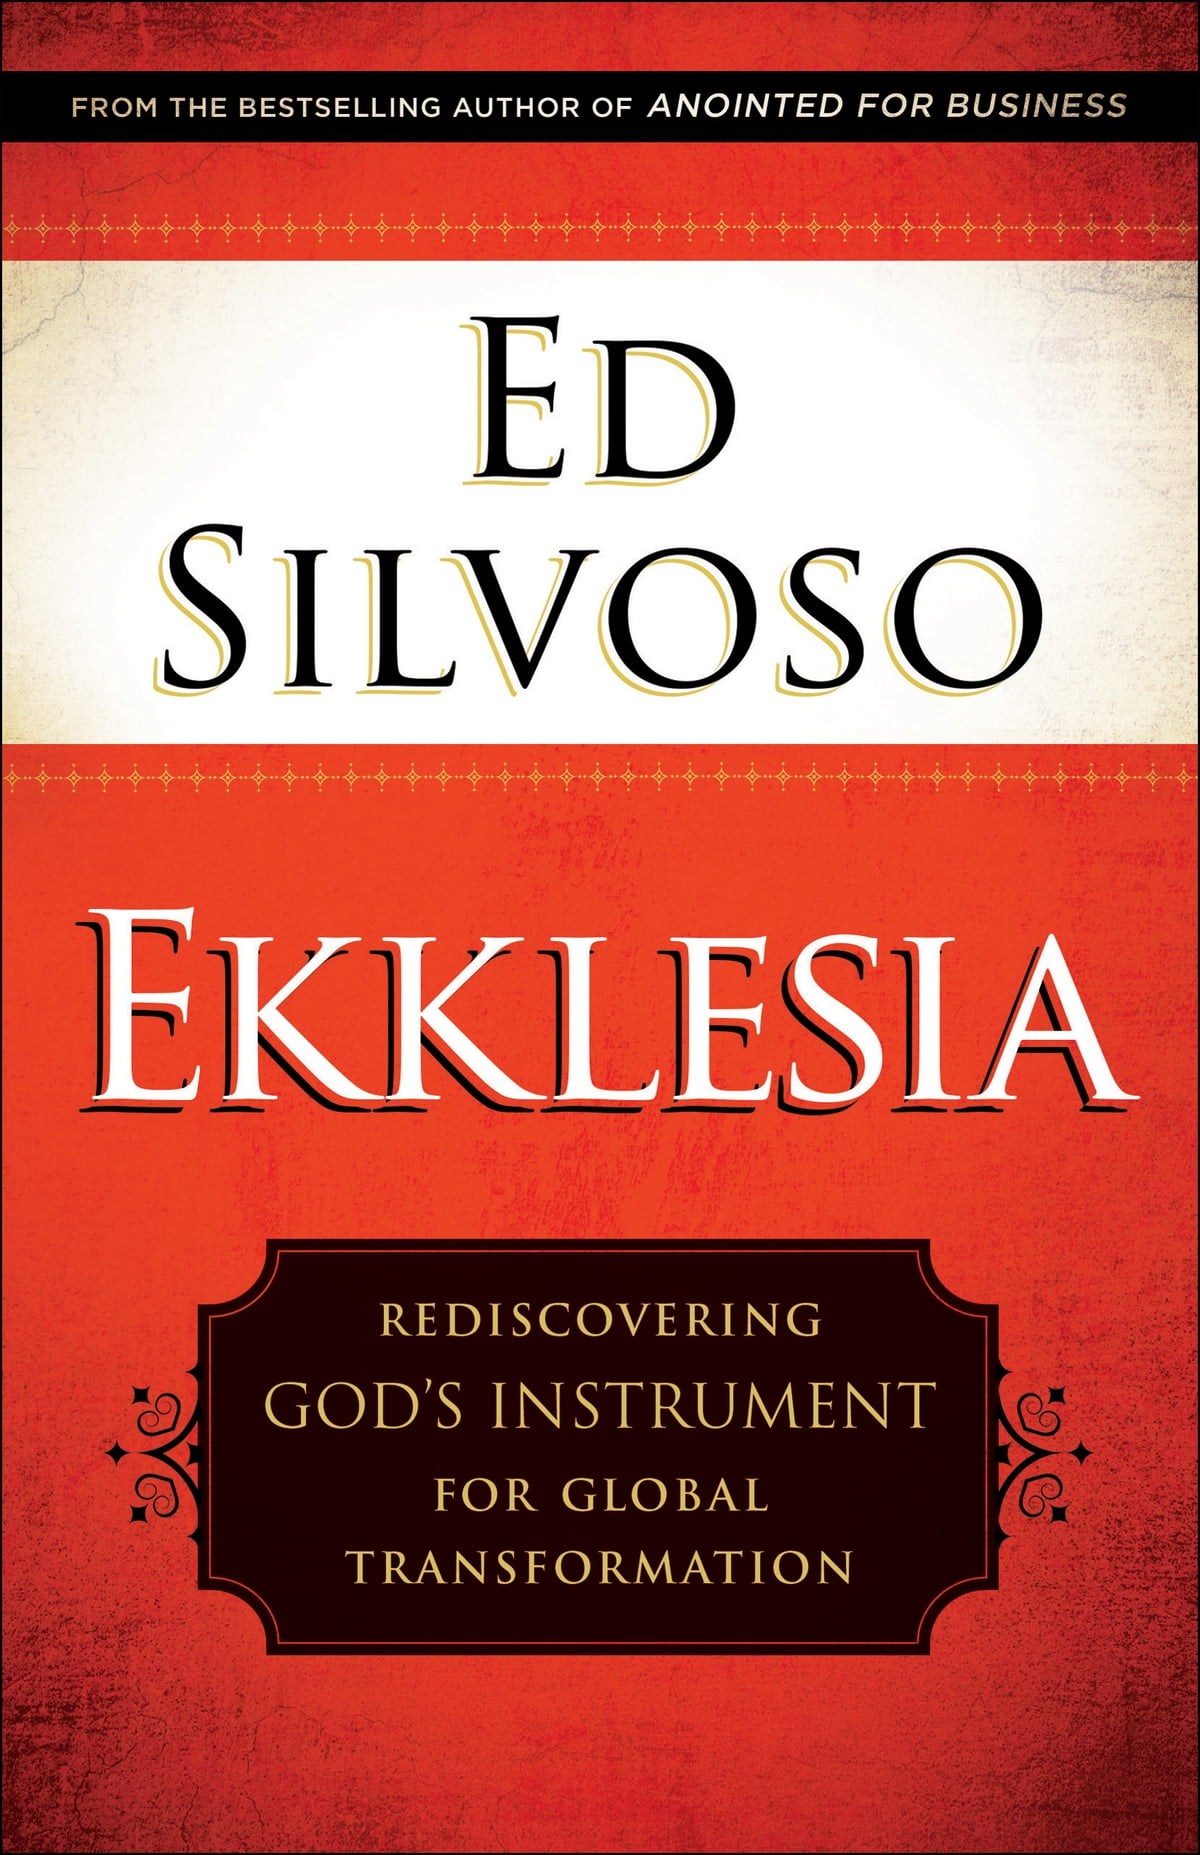 Ekklesia by Ed Silvoso